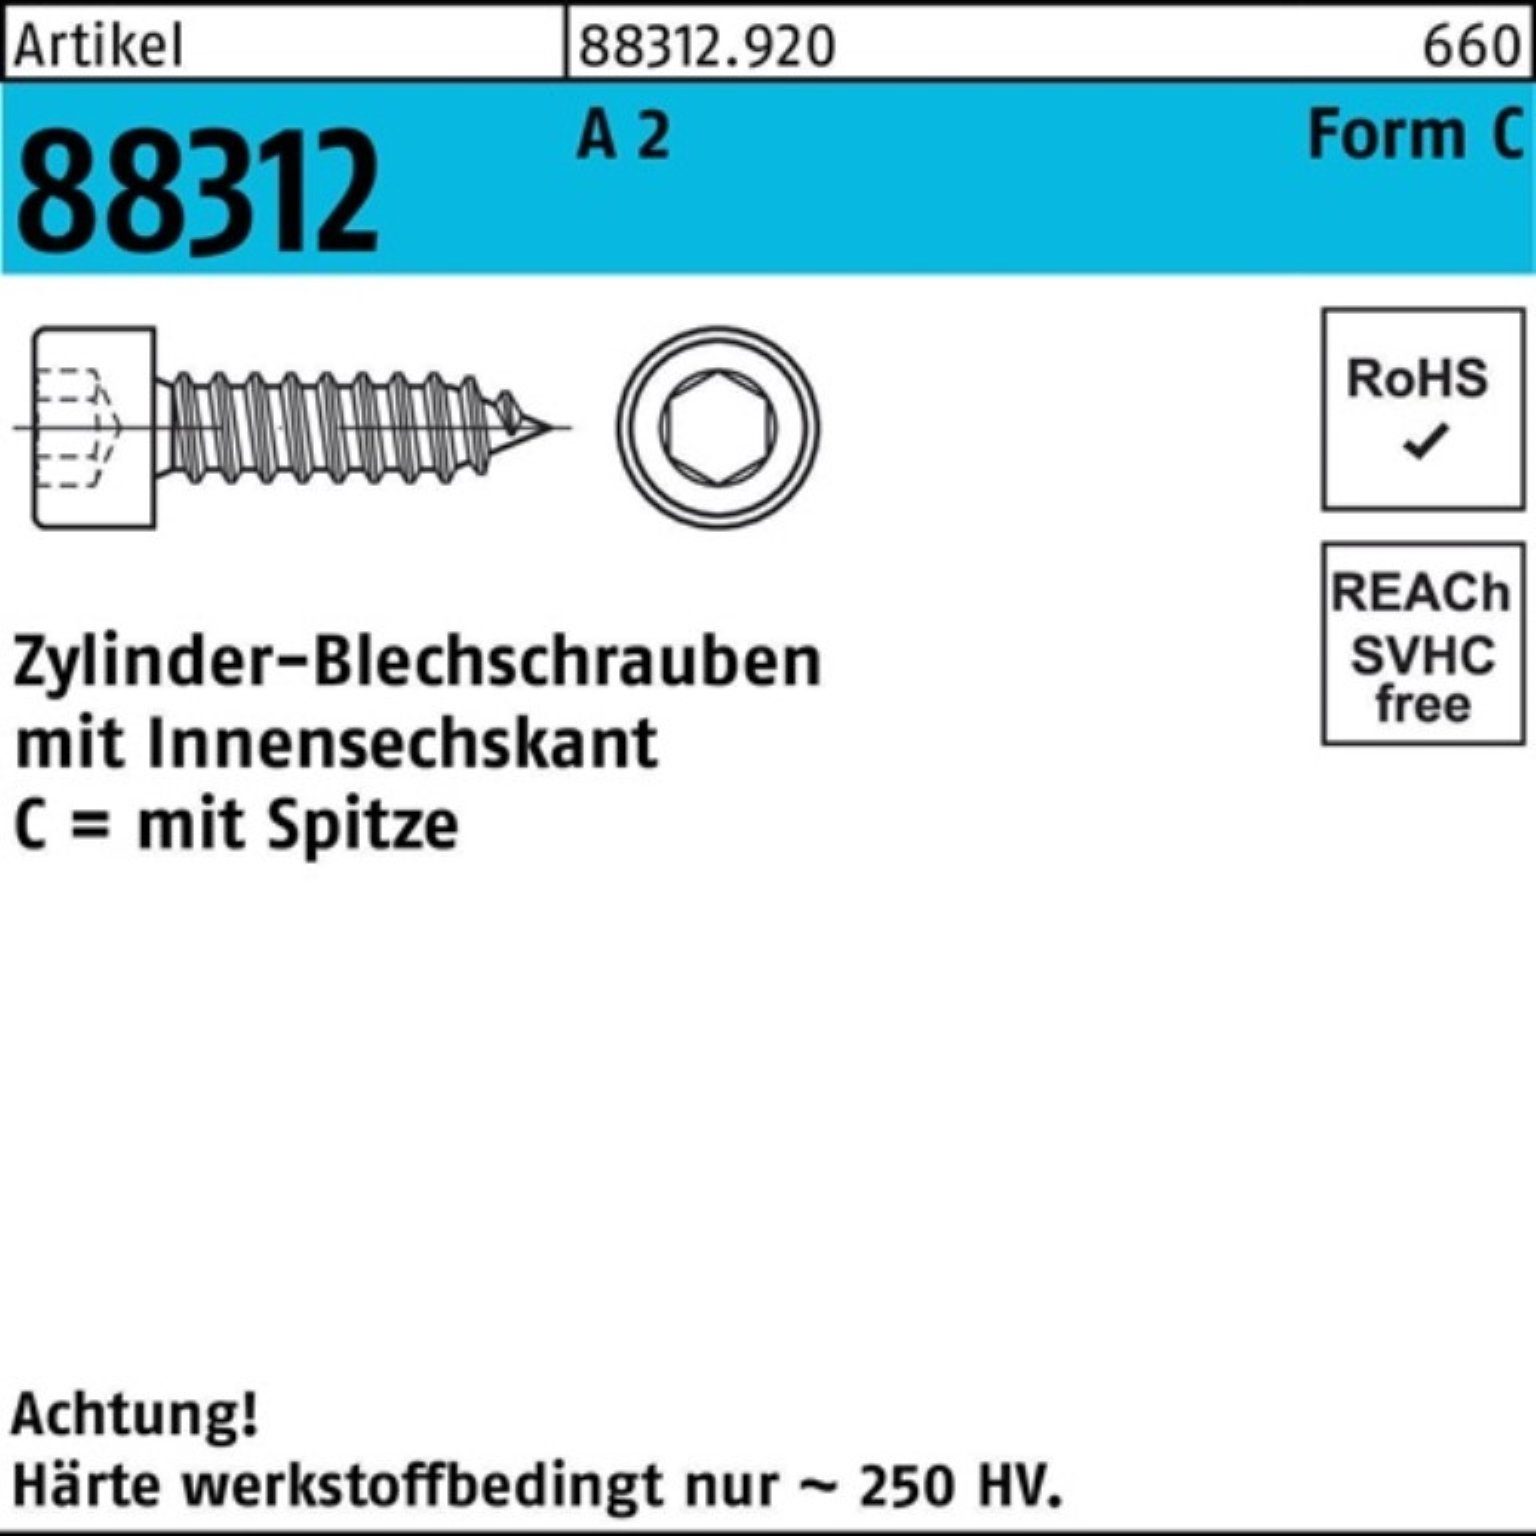 Reyher Blechschraube 200er Pack Zylinderblechschraube R 88312 Spitze/Innen-6kt C 4,8x 45 A